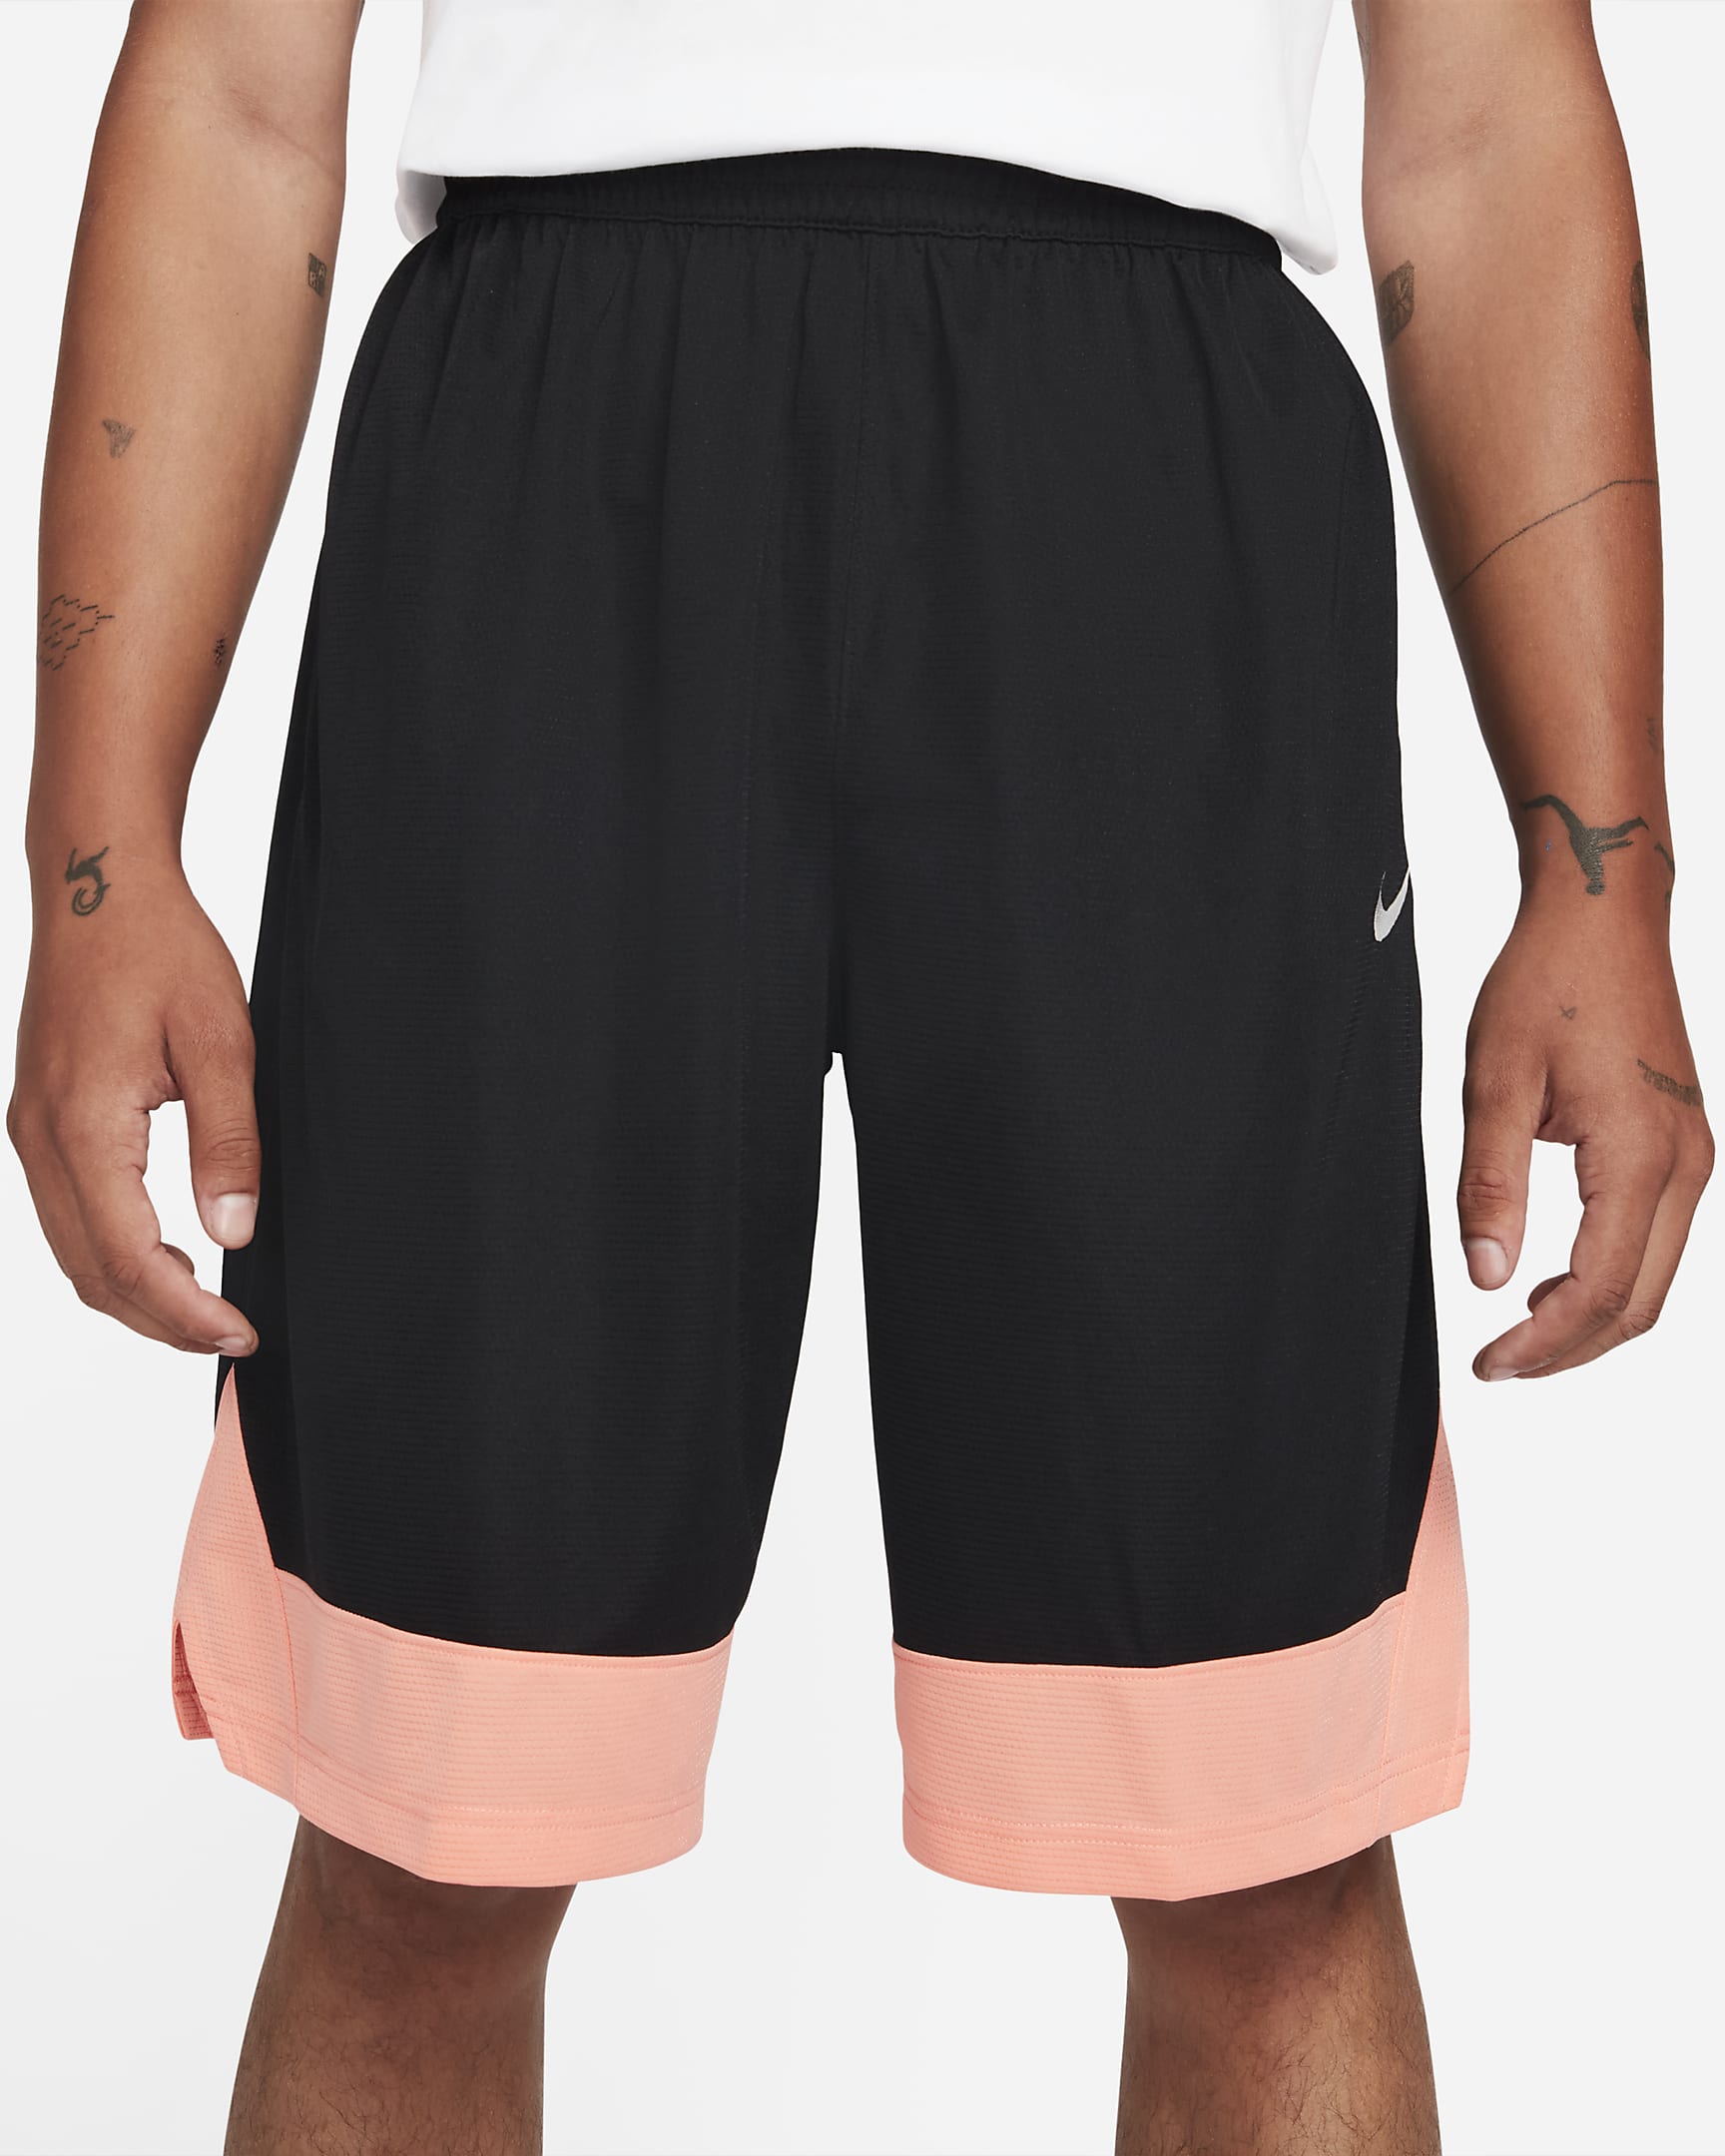 nike-dri-fit-icon-mens-basketball-shorts-2c8F76.png